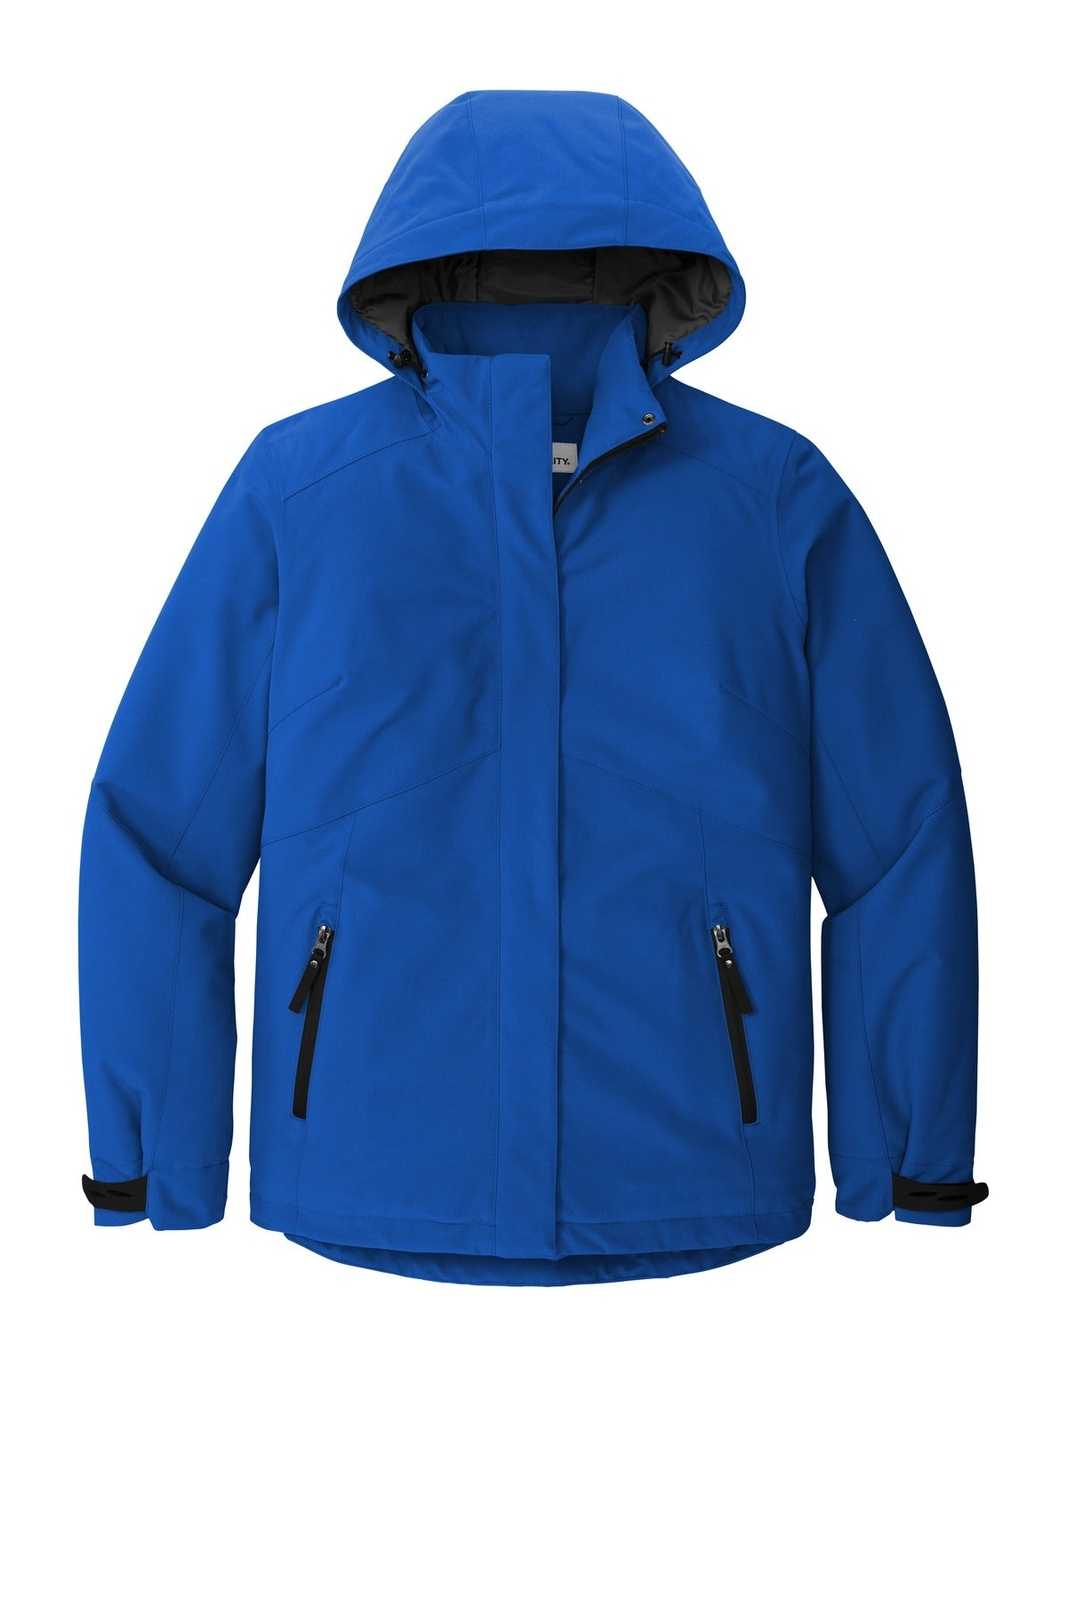 Port Authority L405 Ladies Insulated Waterproof Tech Jacket - Cobalt Blue - HIT a Double - 5